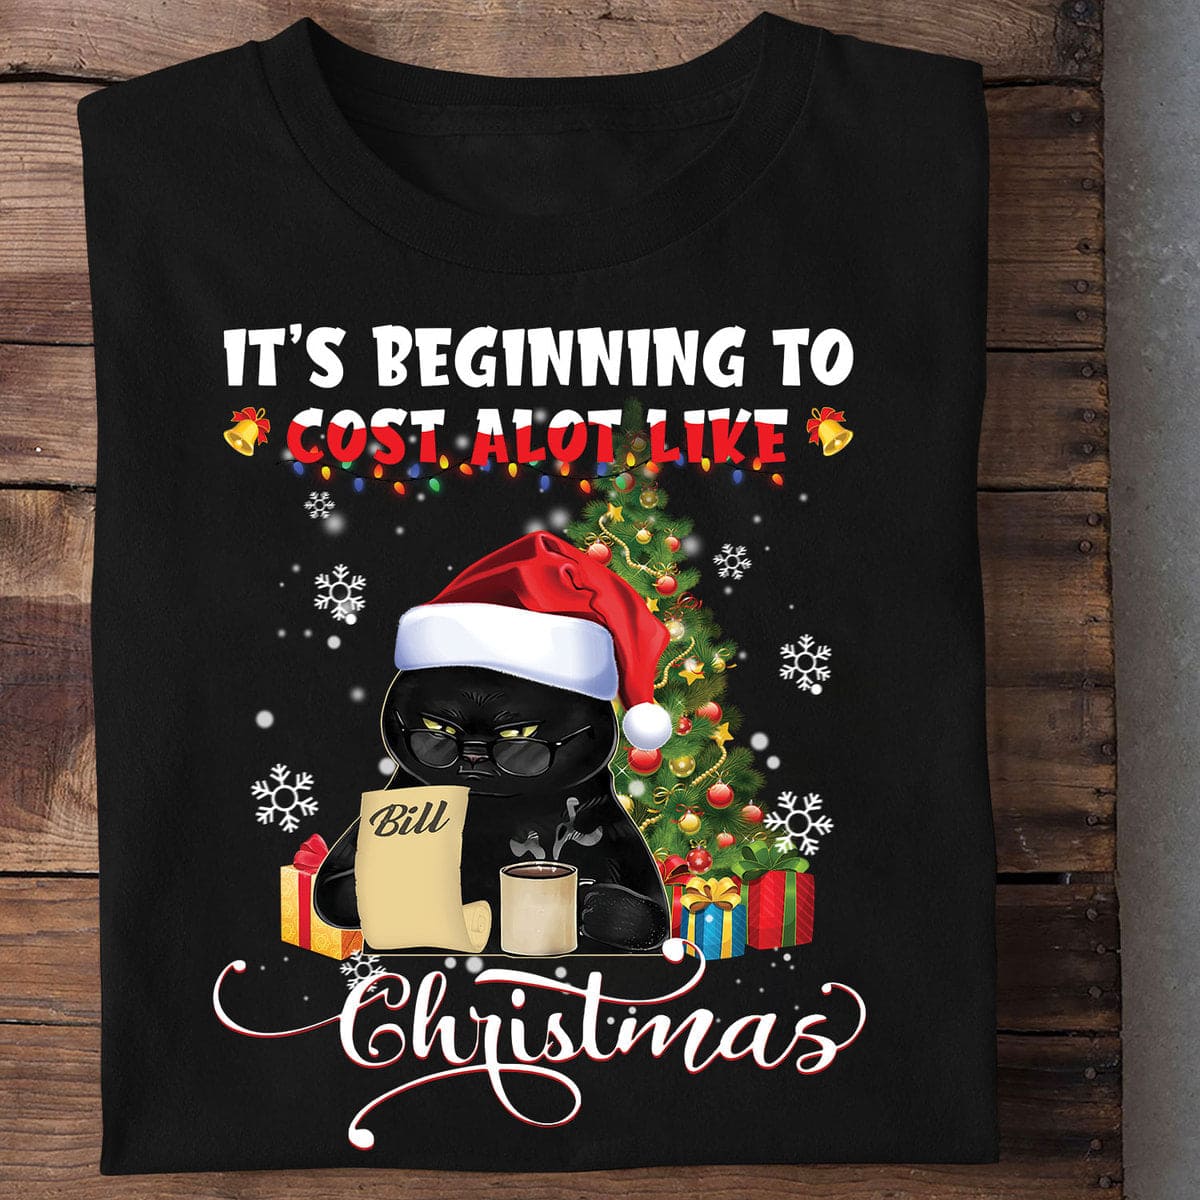 Santa Black Cat Christmas Gift - It's beginning to cost alot like christmas